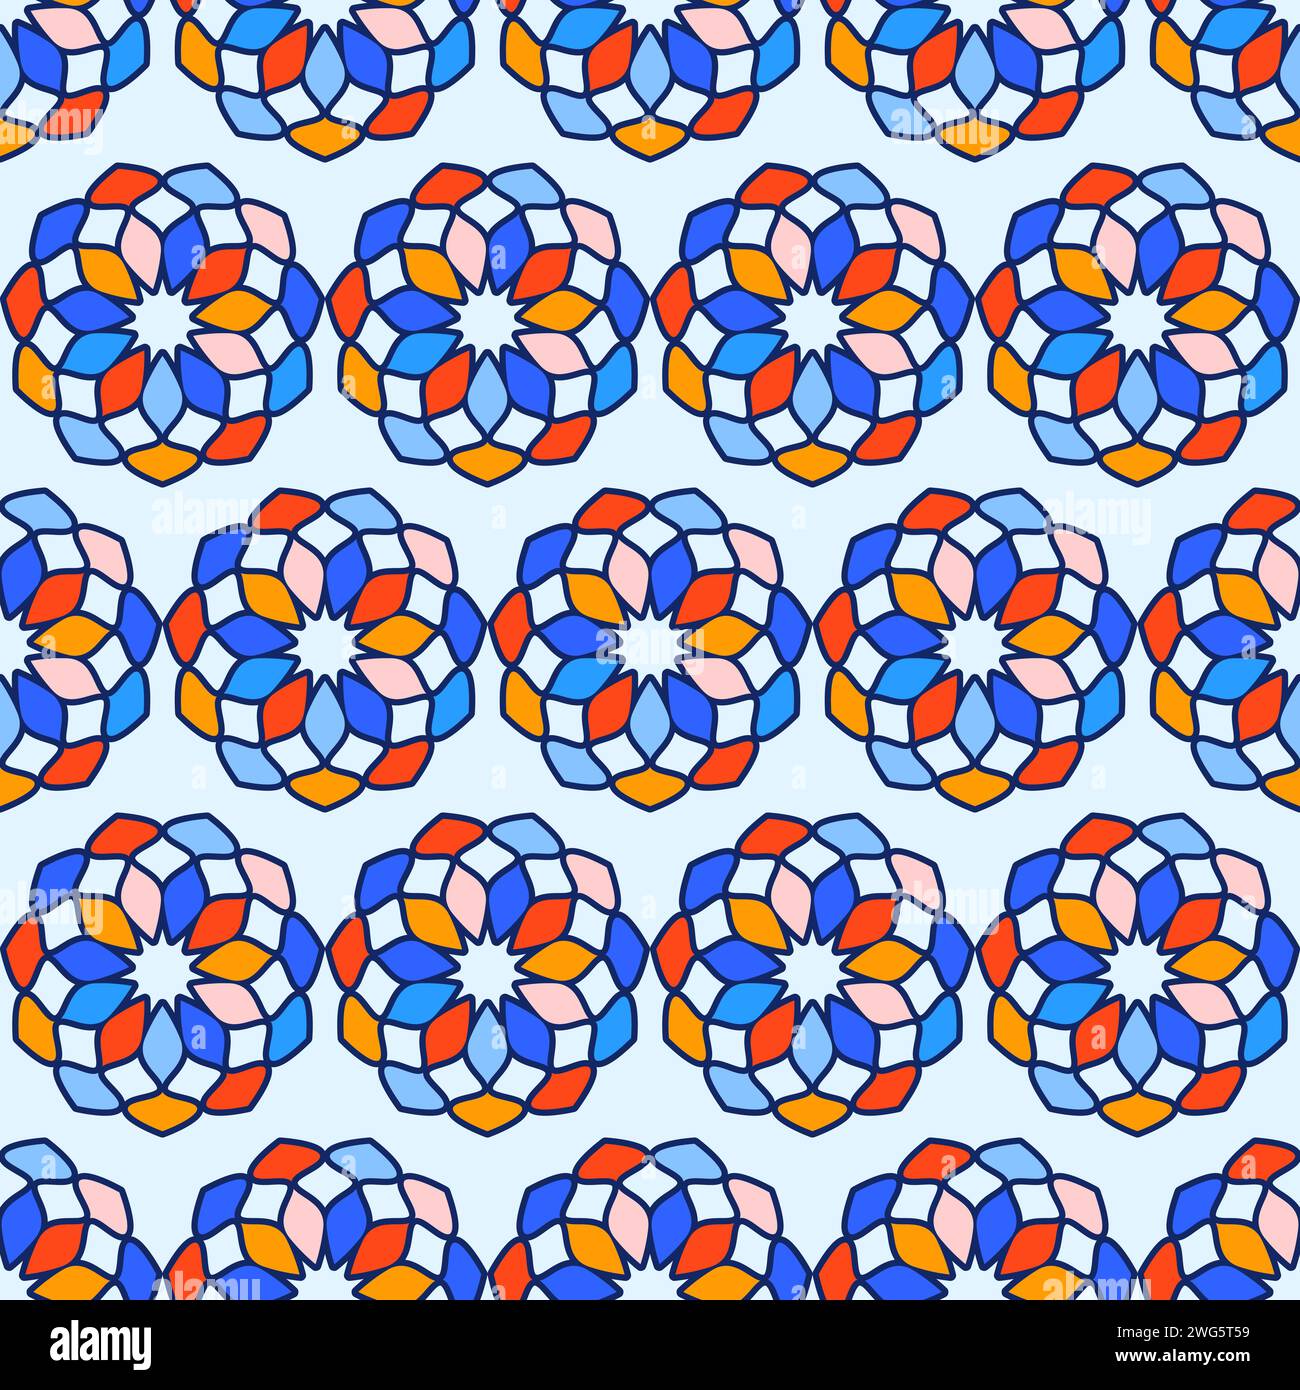 Nahtloses Muster Buntglasfenster Kaleidoskop farbenfrohes Muster. Mosaikvektor-Illustration. Isoliert auf hellblauem Hintergrund. Stock Vektor